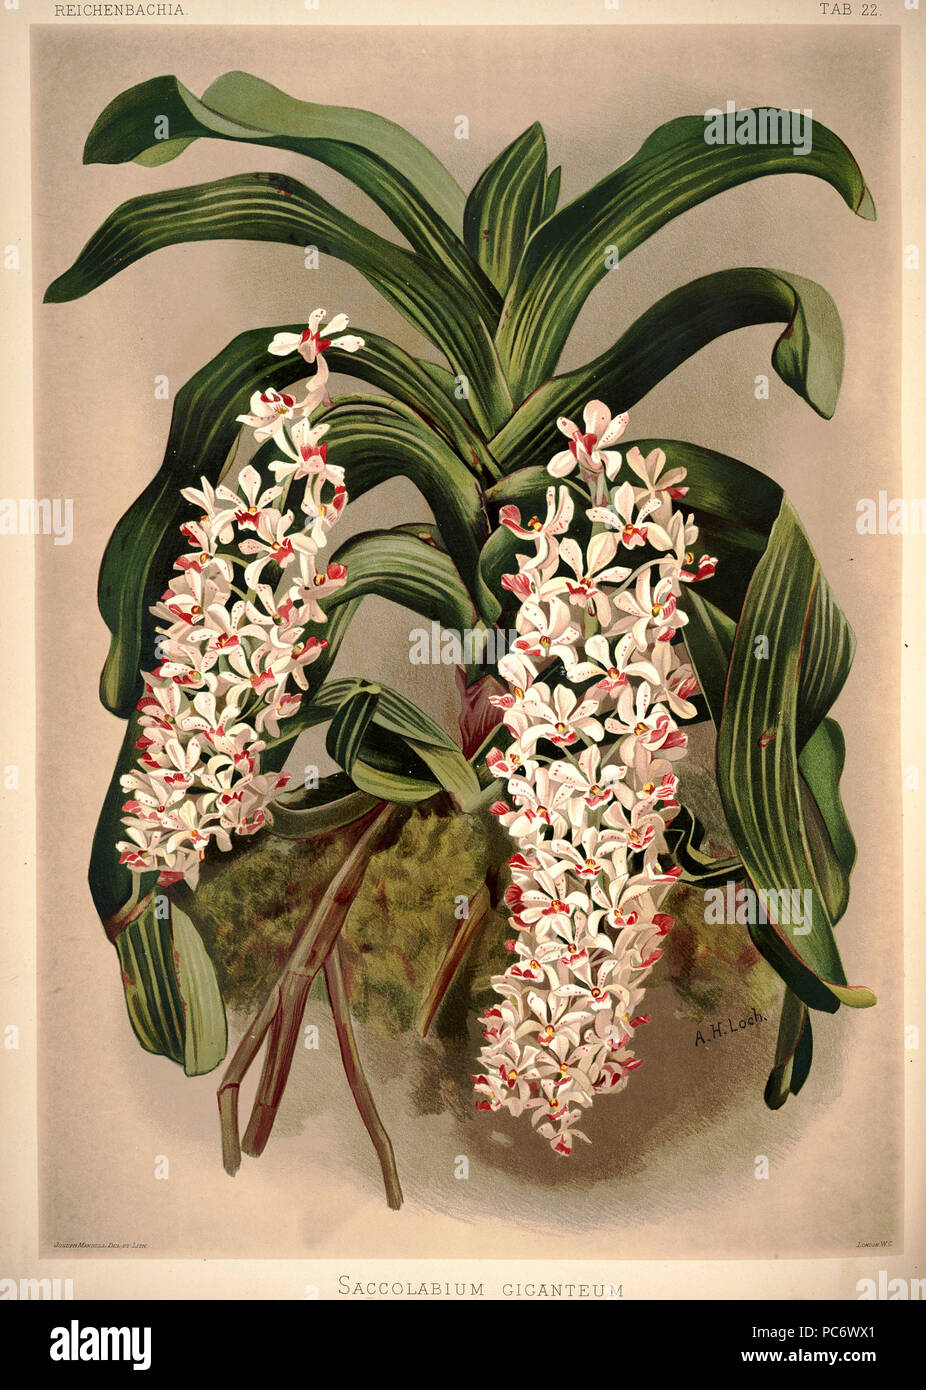 220 Frederick Sander - Reichenbachia I plate 22 (1888) - Saccolabium giganteum Stock Photo